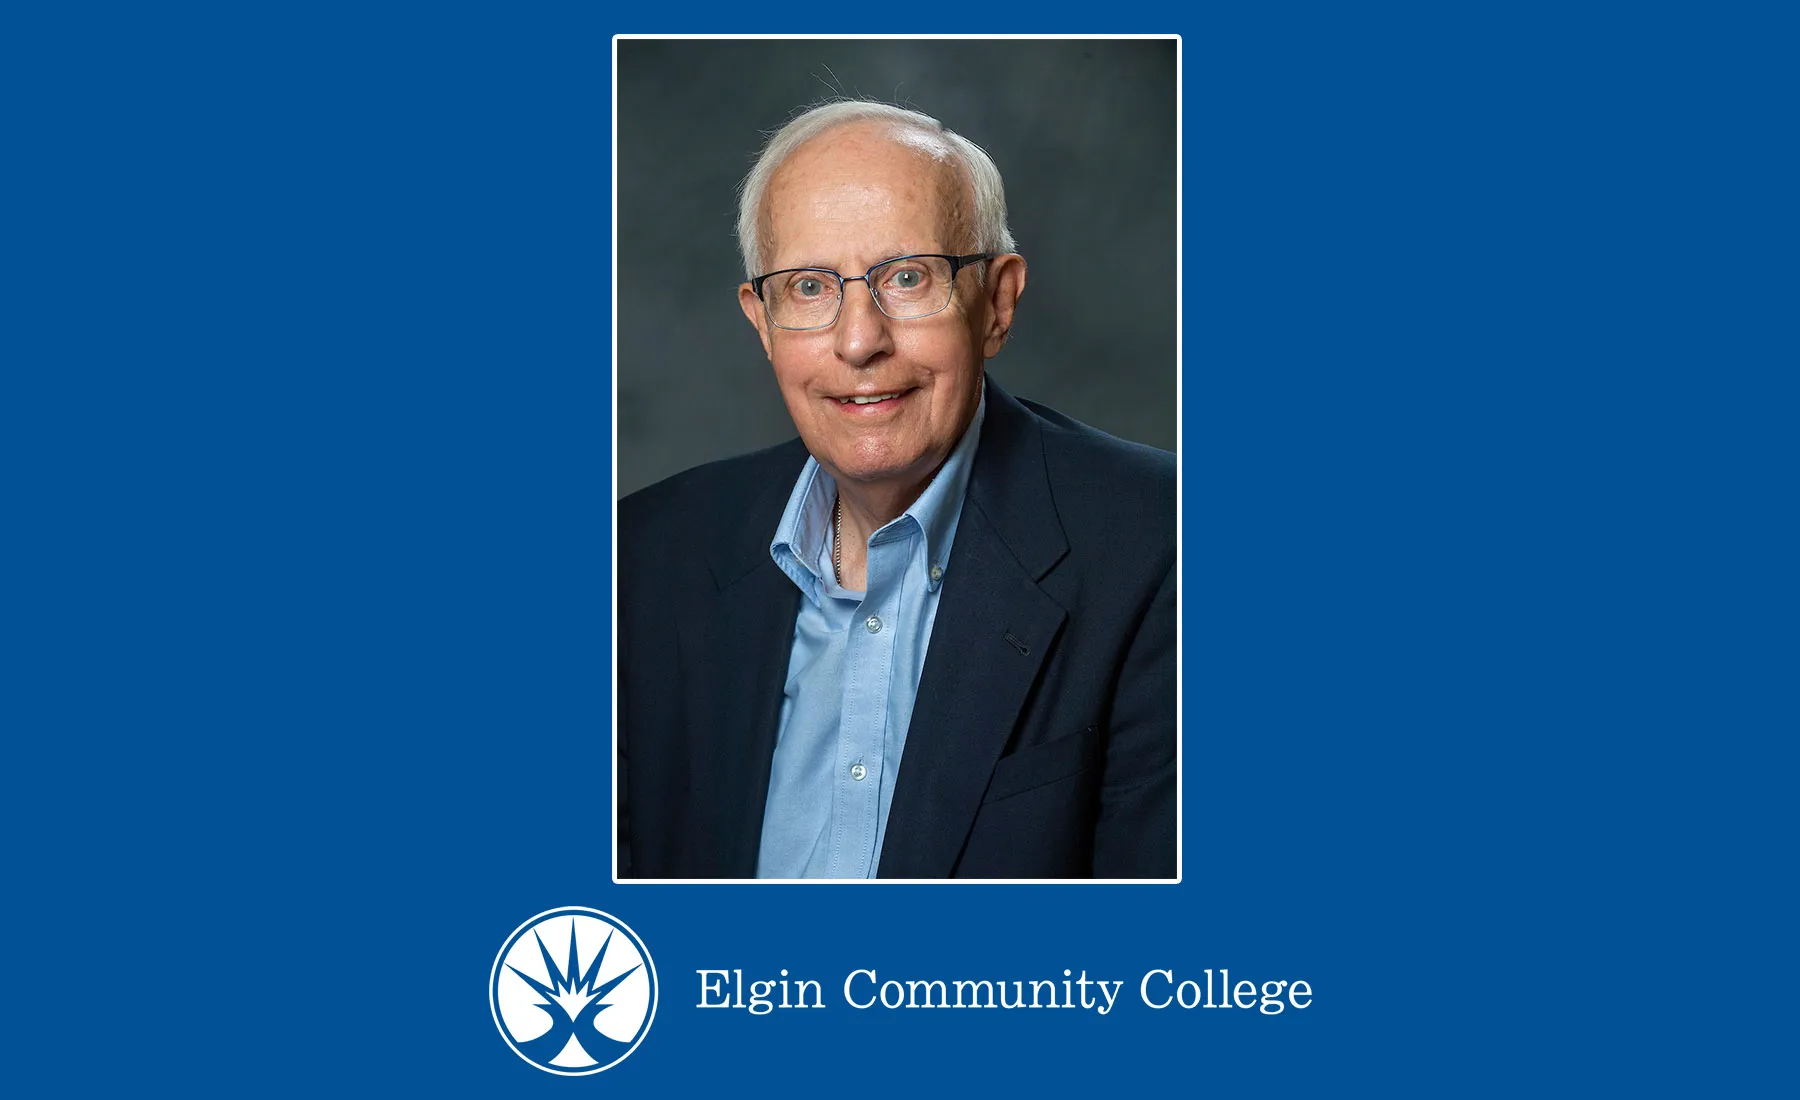 Robert Malm, 2020 Elgin Community College Friend of Education Award winner.